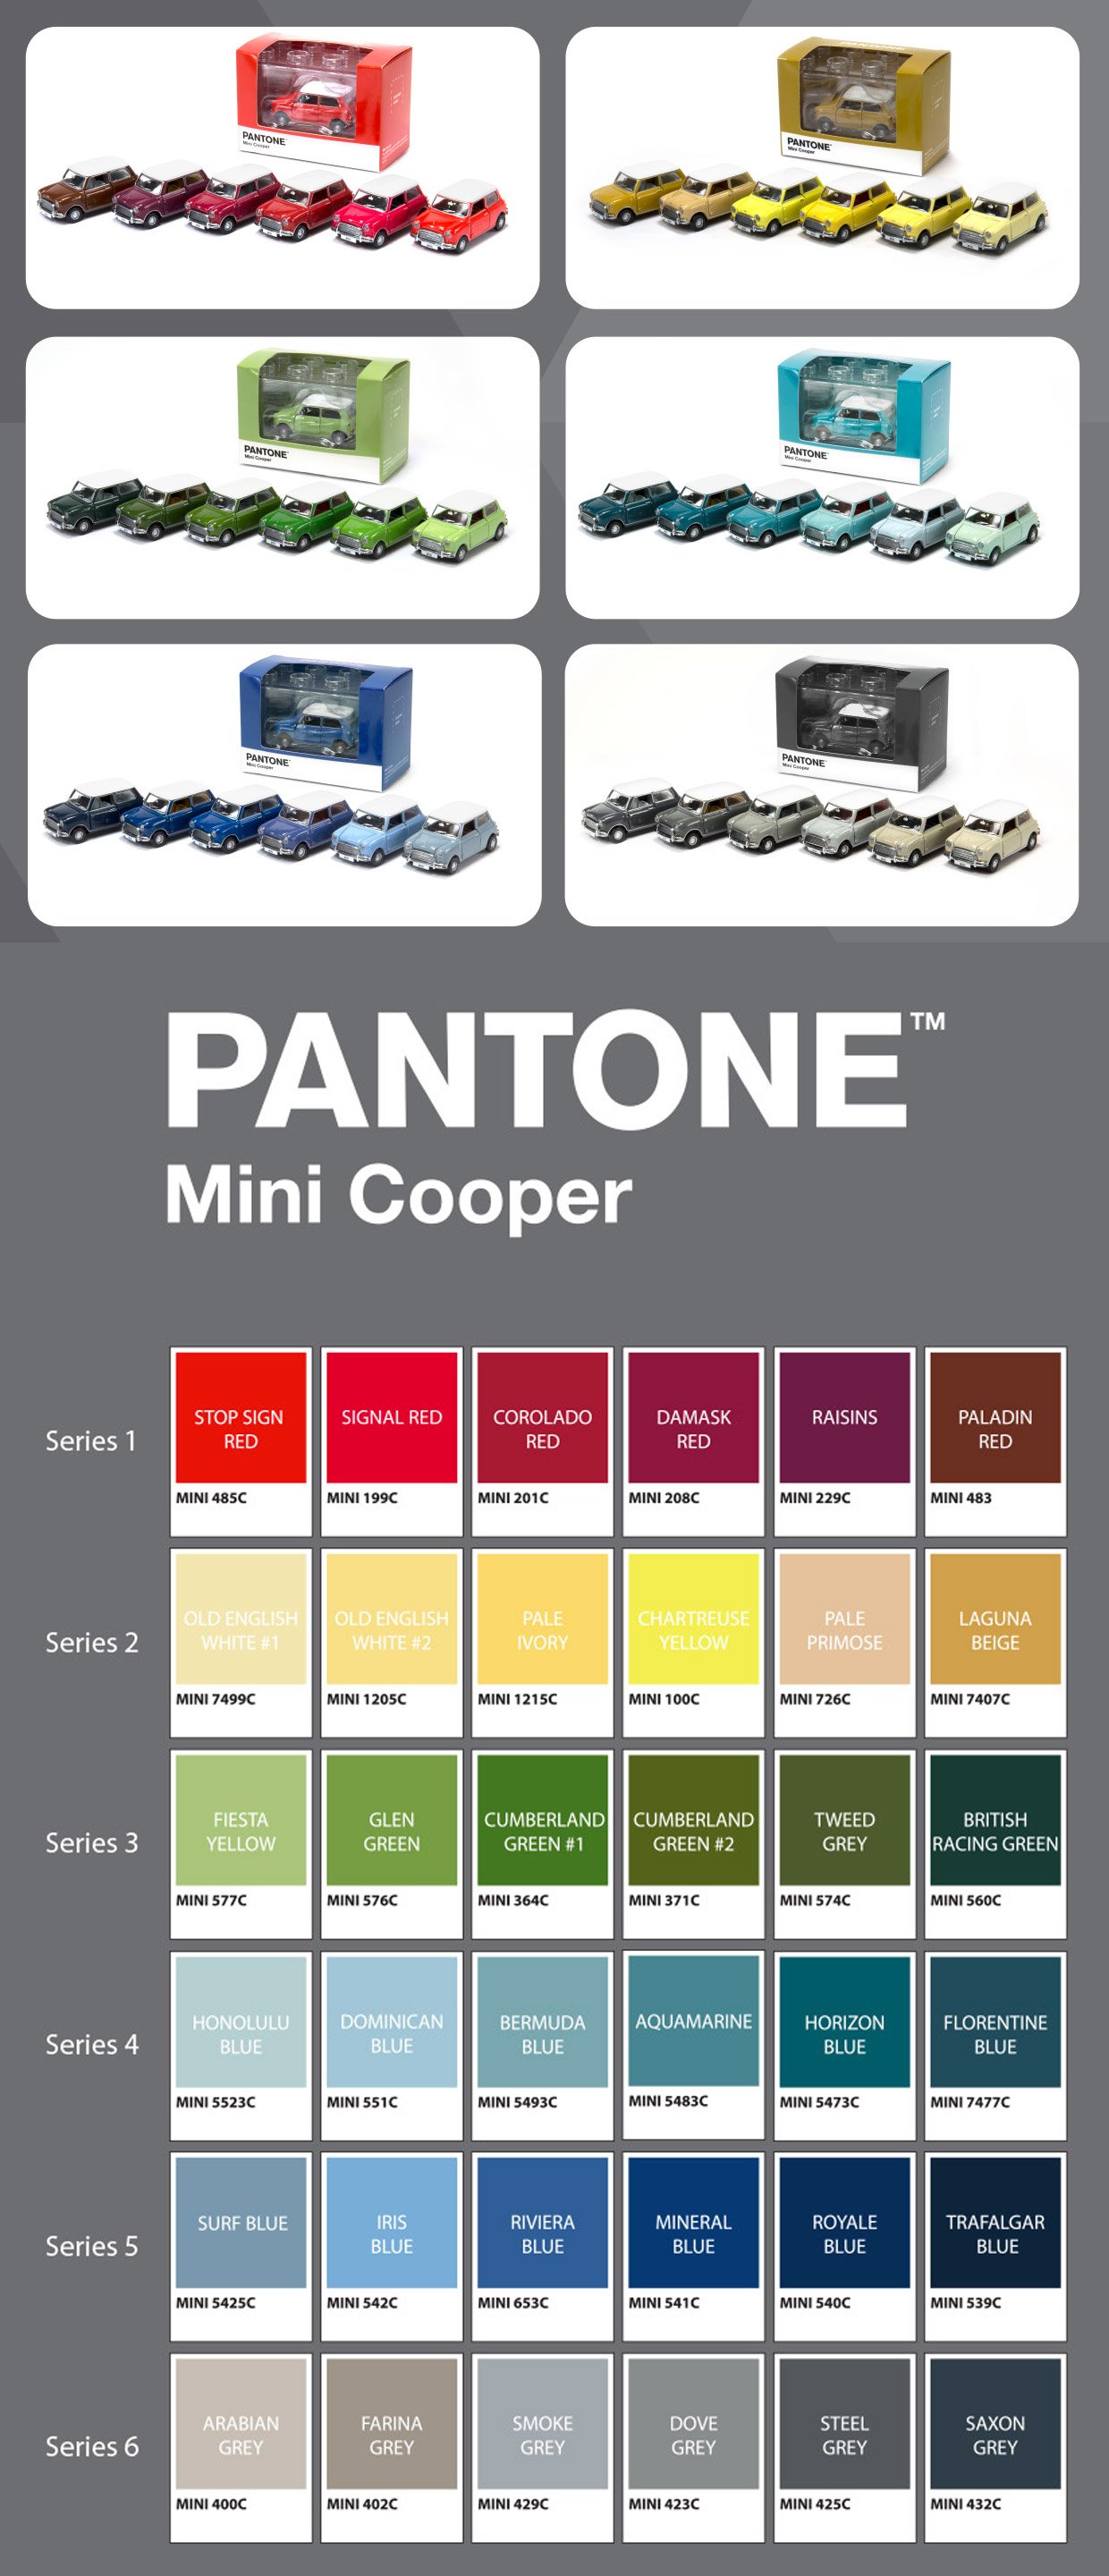 1/50 MINI Cooper Pantone Cars